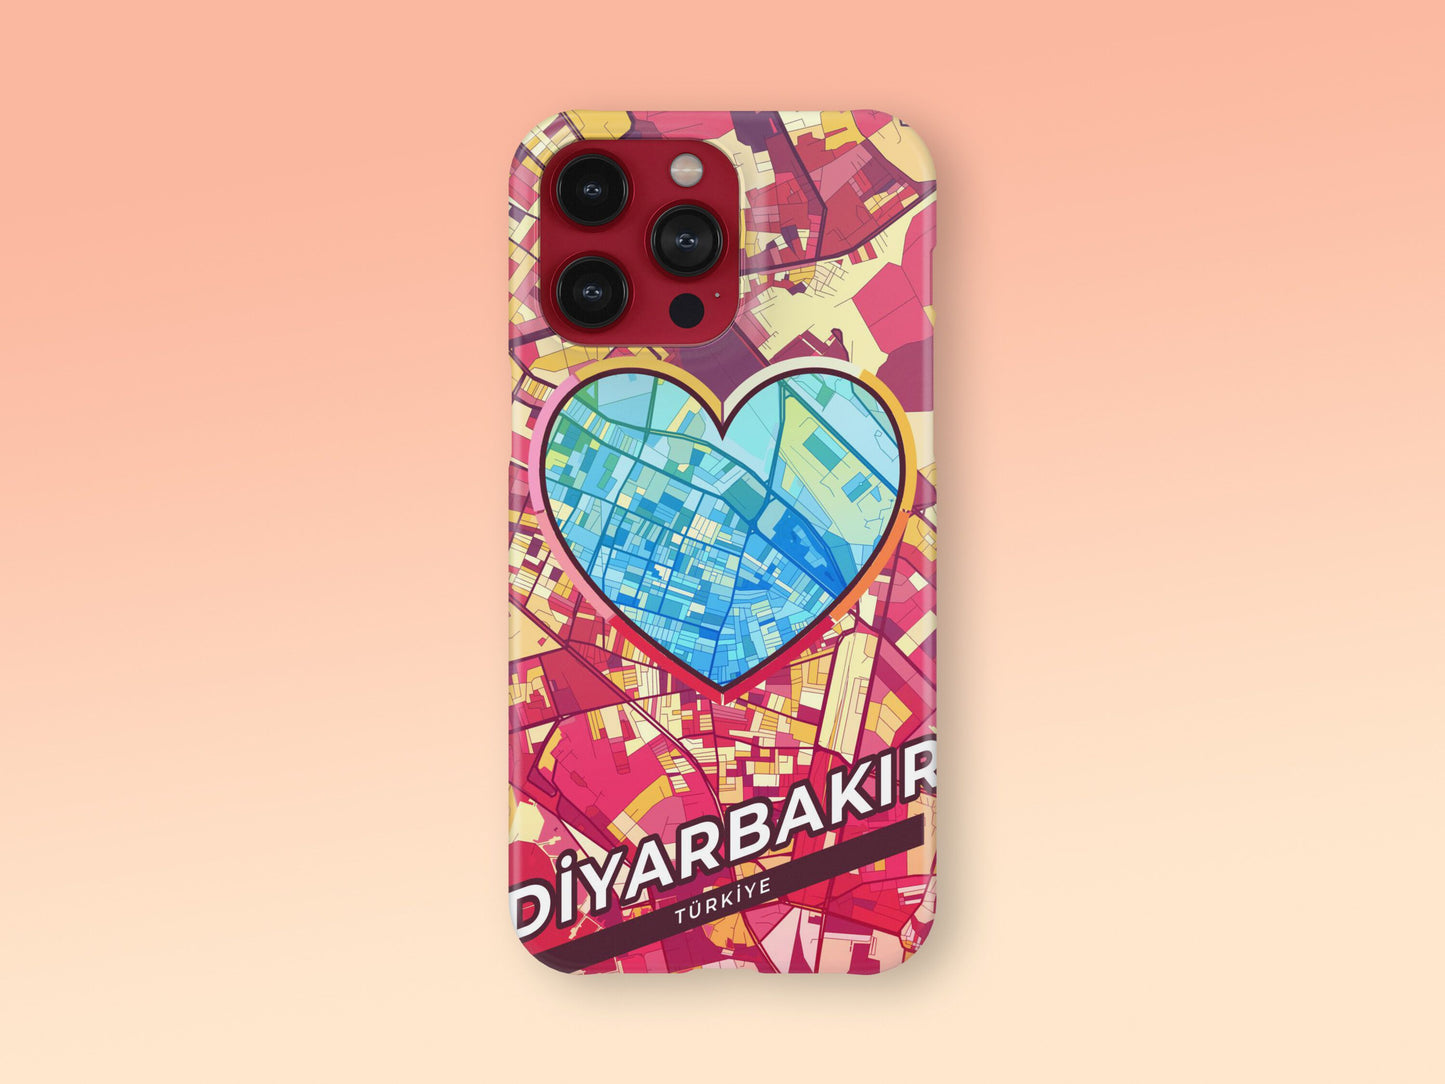 Diyarbakır Turkey slim phone case with colorful icon. Birthday, wedding or housewarming gift. Couple match cases. 2